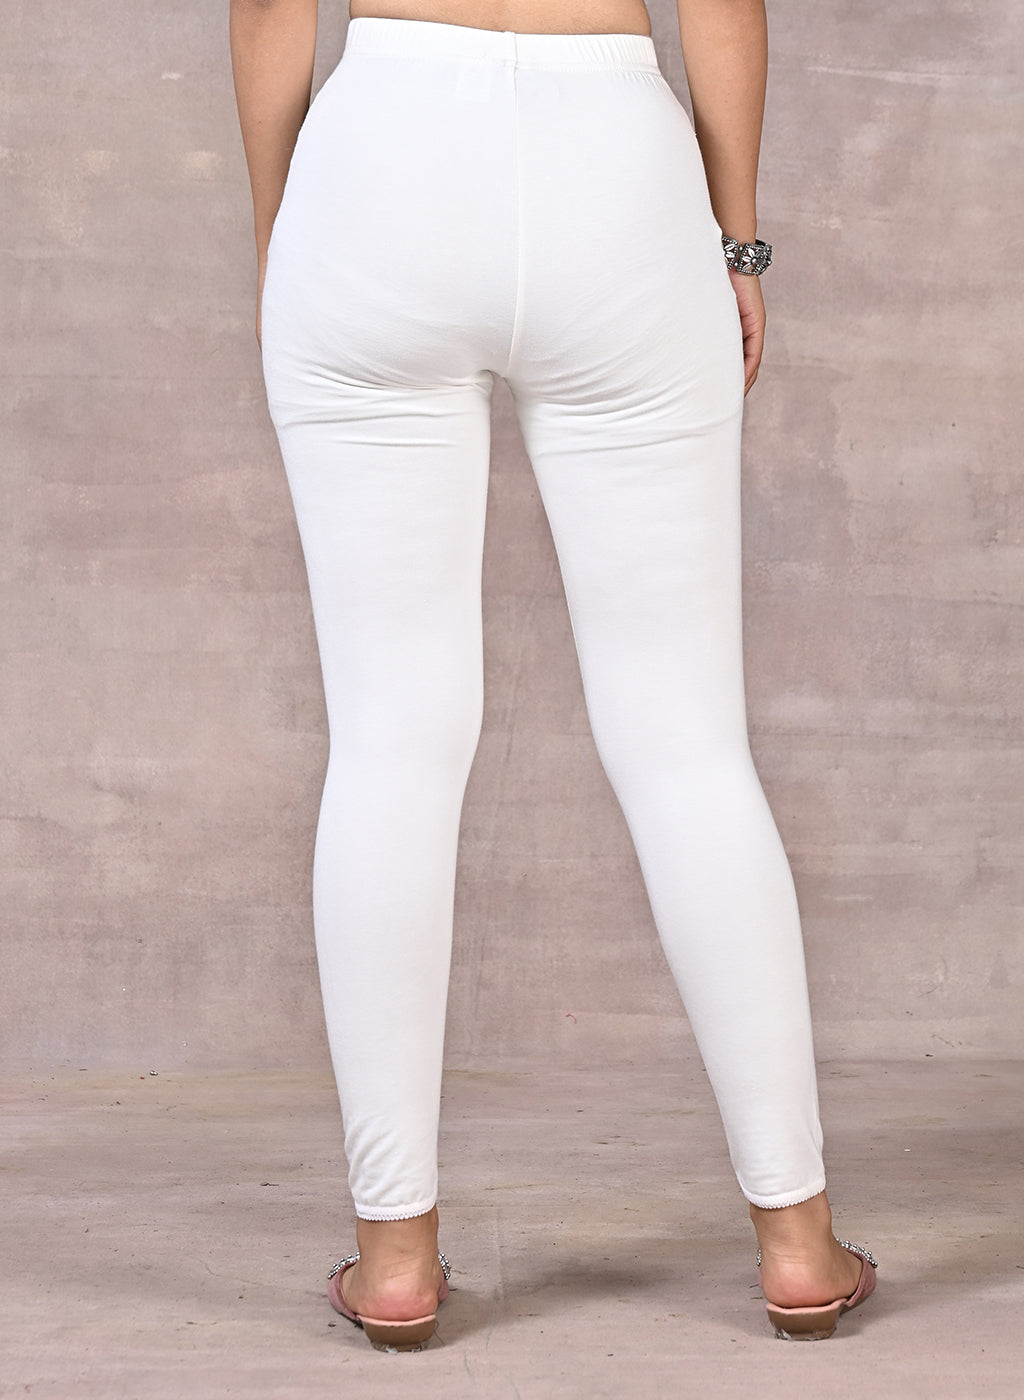 Buy Off White Leggings for Women by Svrnaa Online | Ajio.com